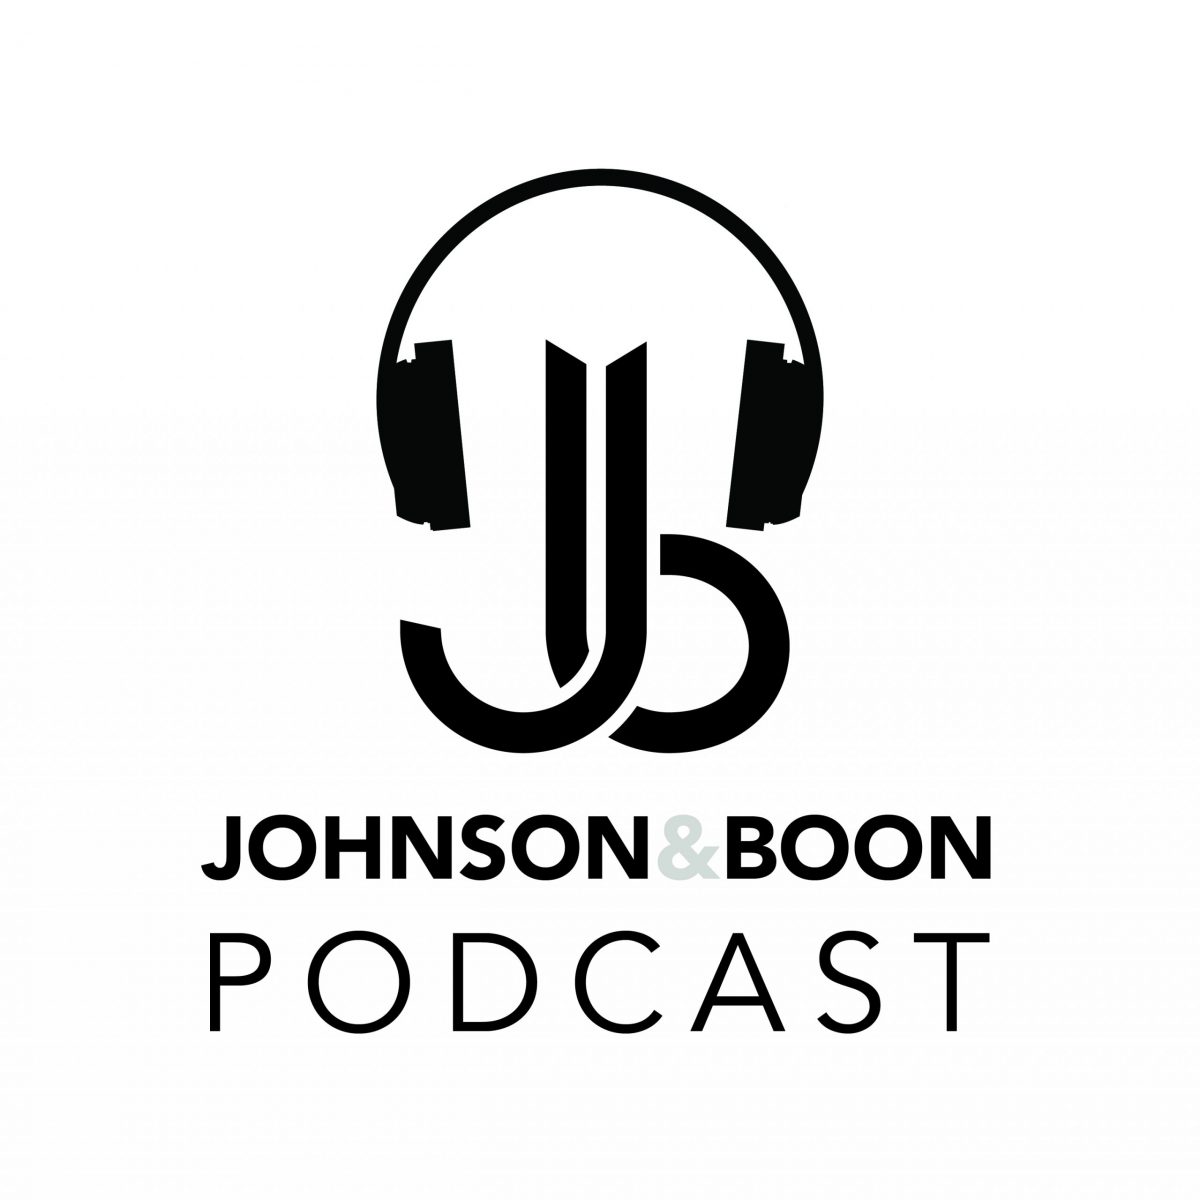 J&B Podcast-01